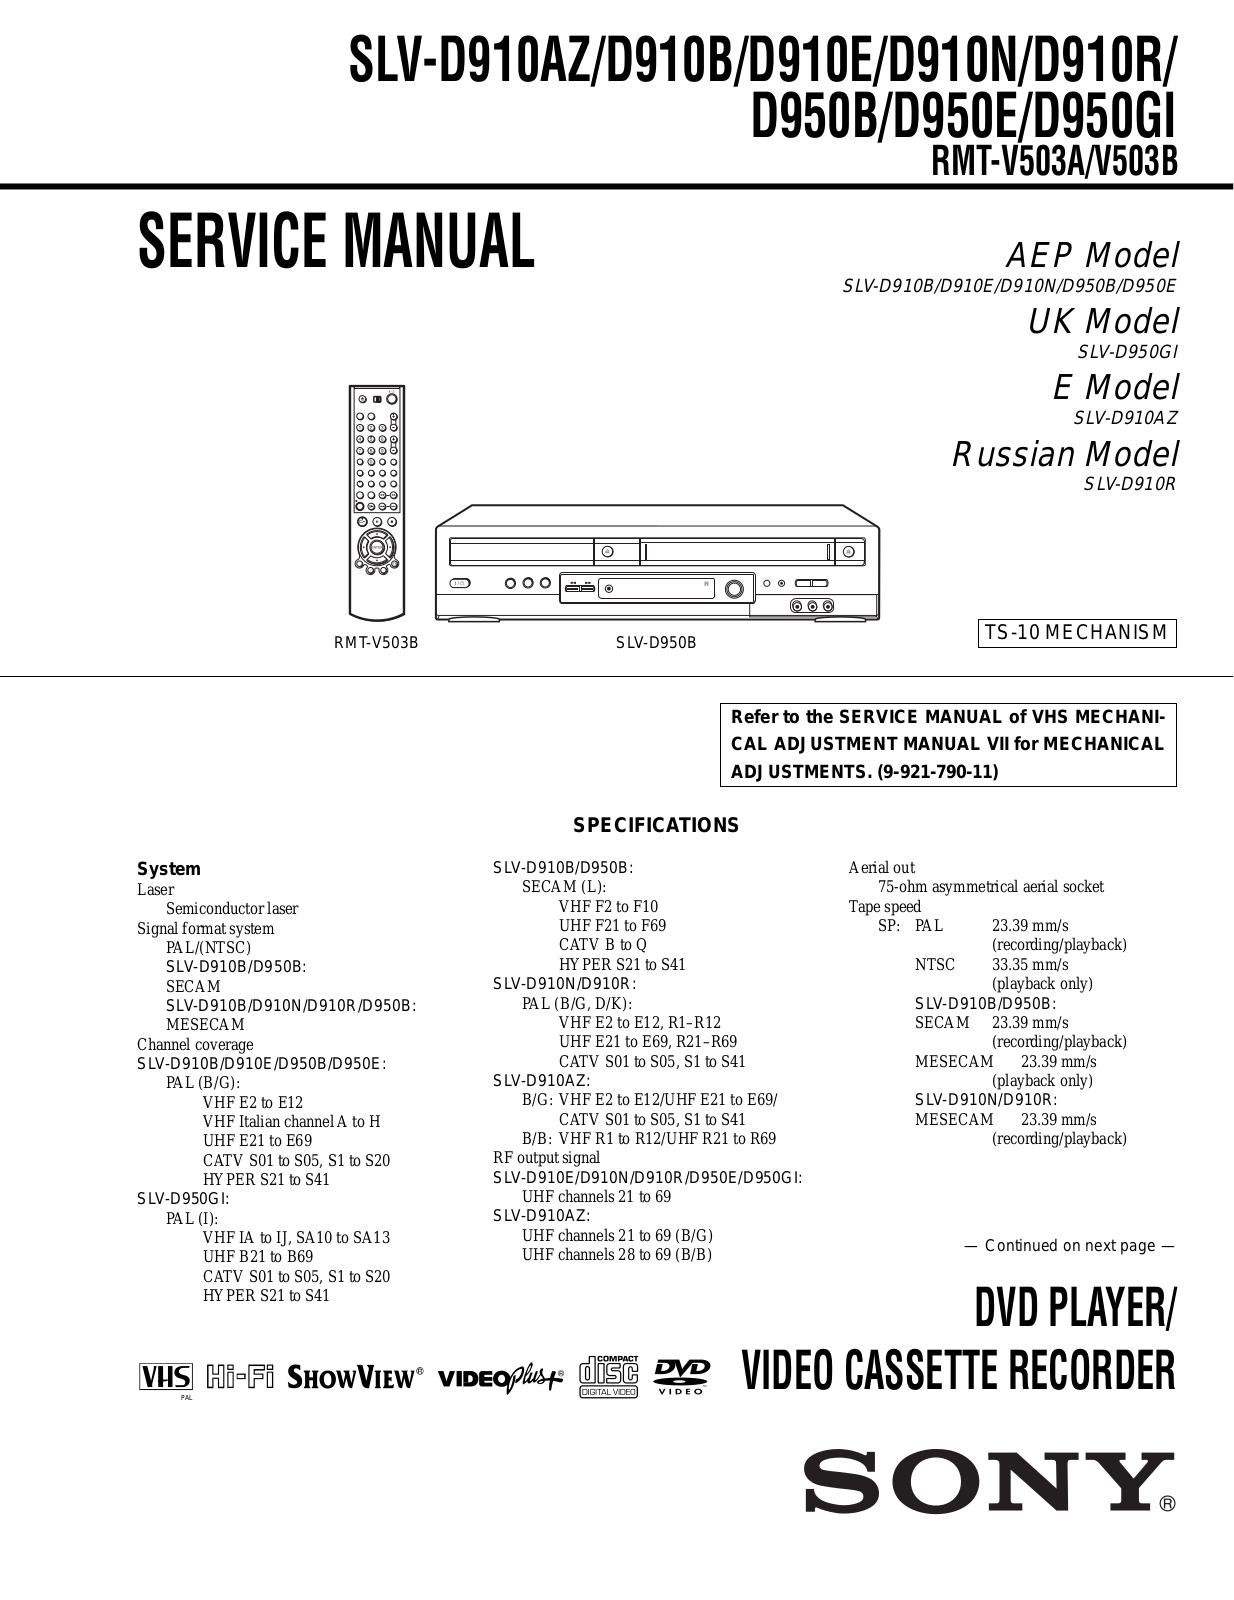 SONY SLV-D910AZ, SLV-D910B, SLV-D910E, SLV-D910N, SLV-D910R Service Manual